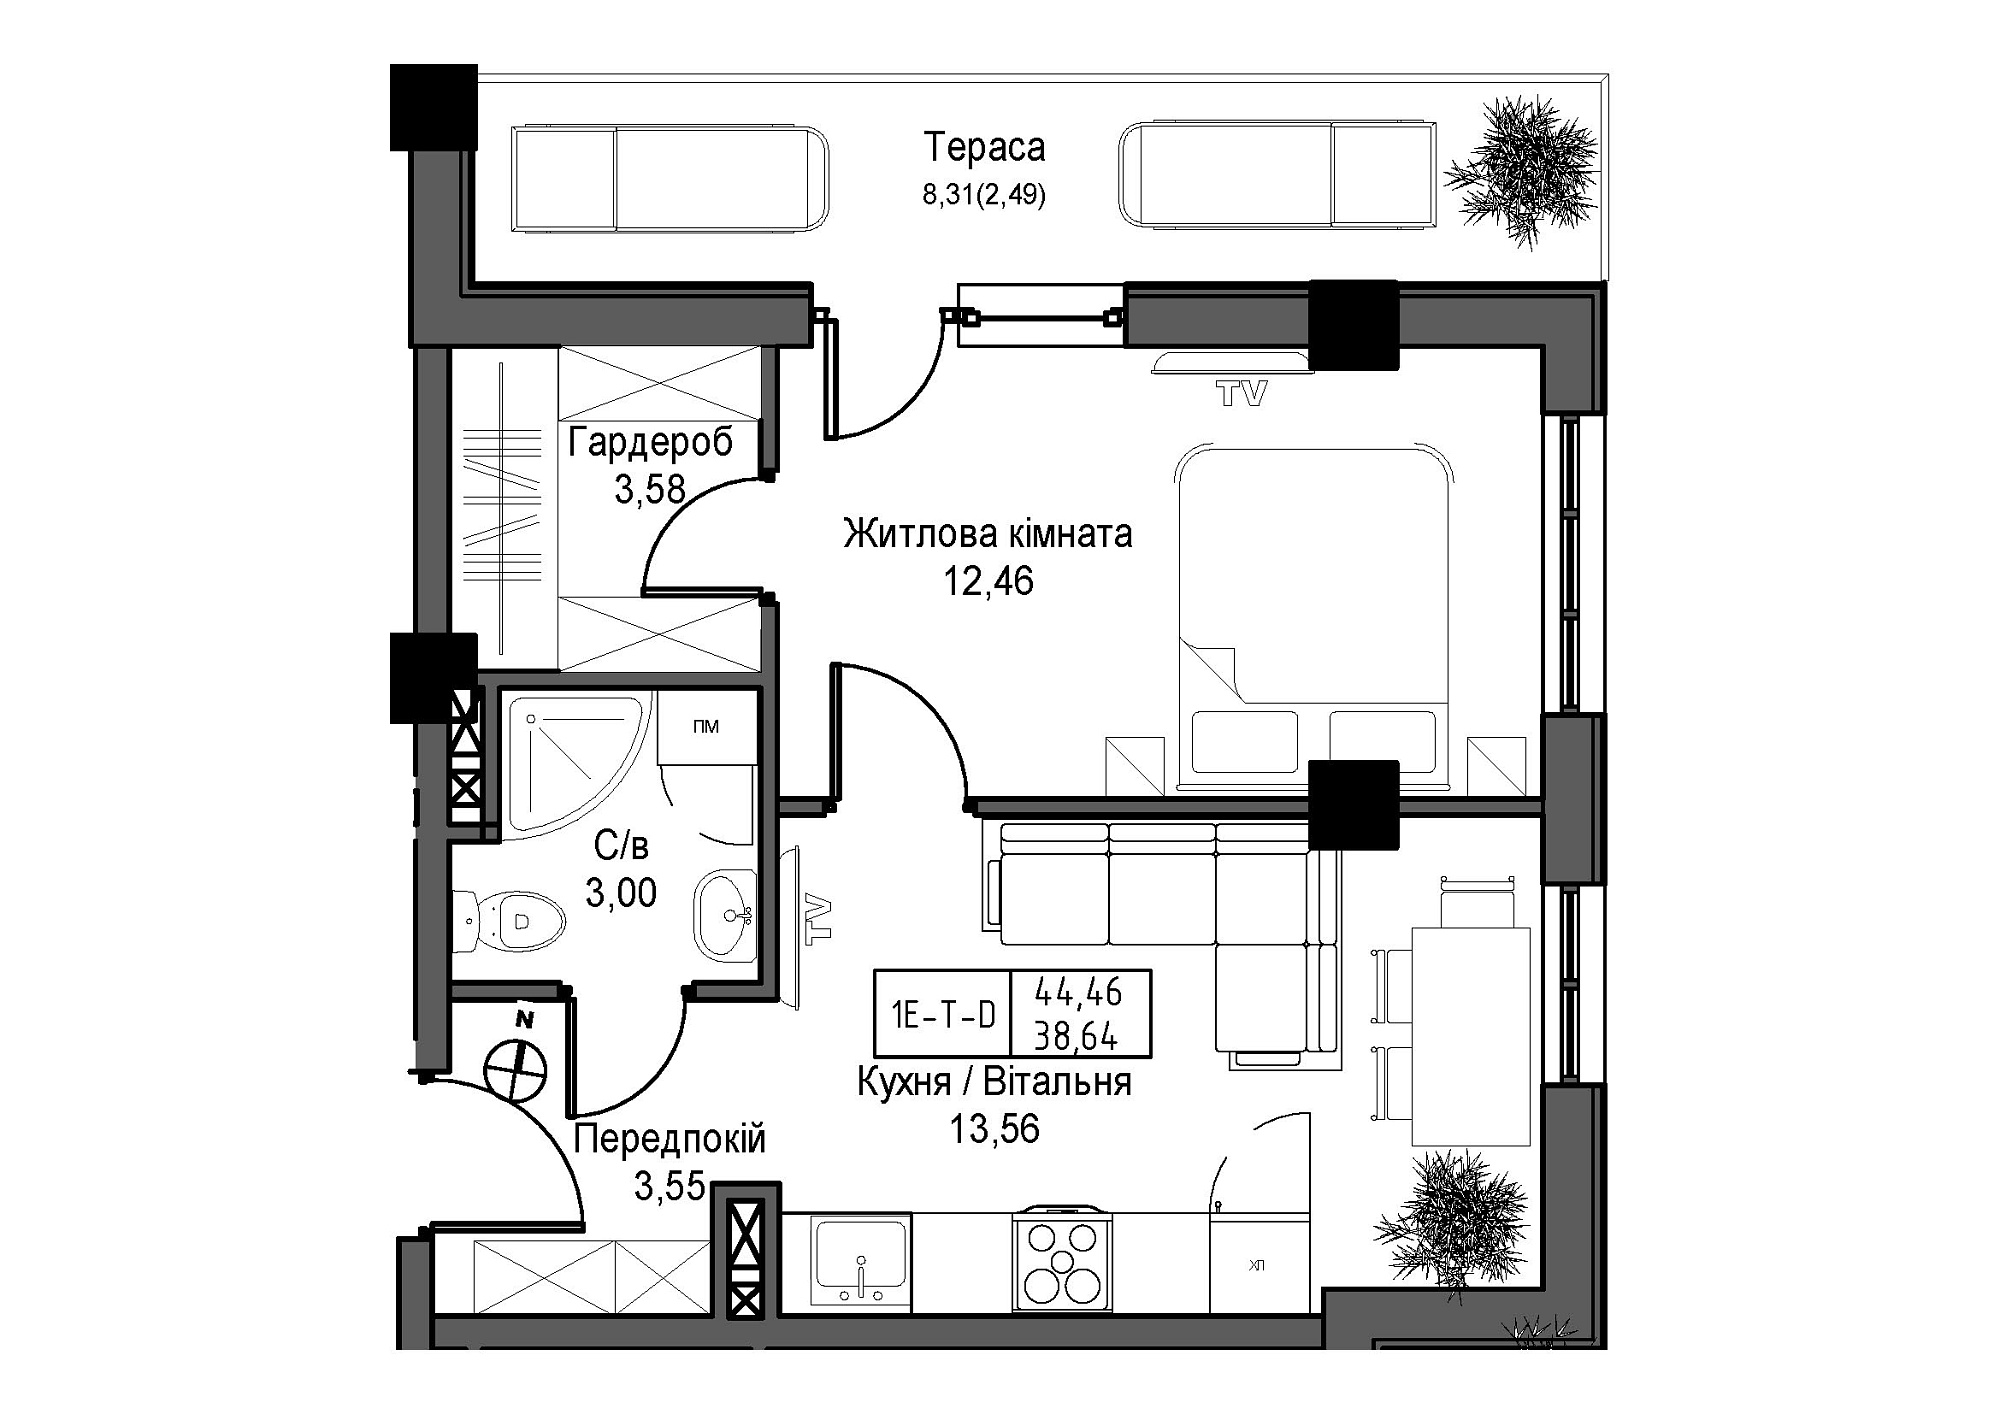 Планування 1-к квартира площею 38.64м2, UM-007-05/0003.